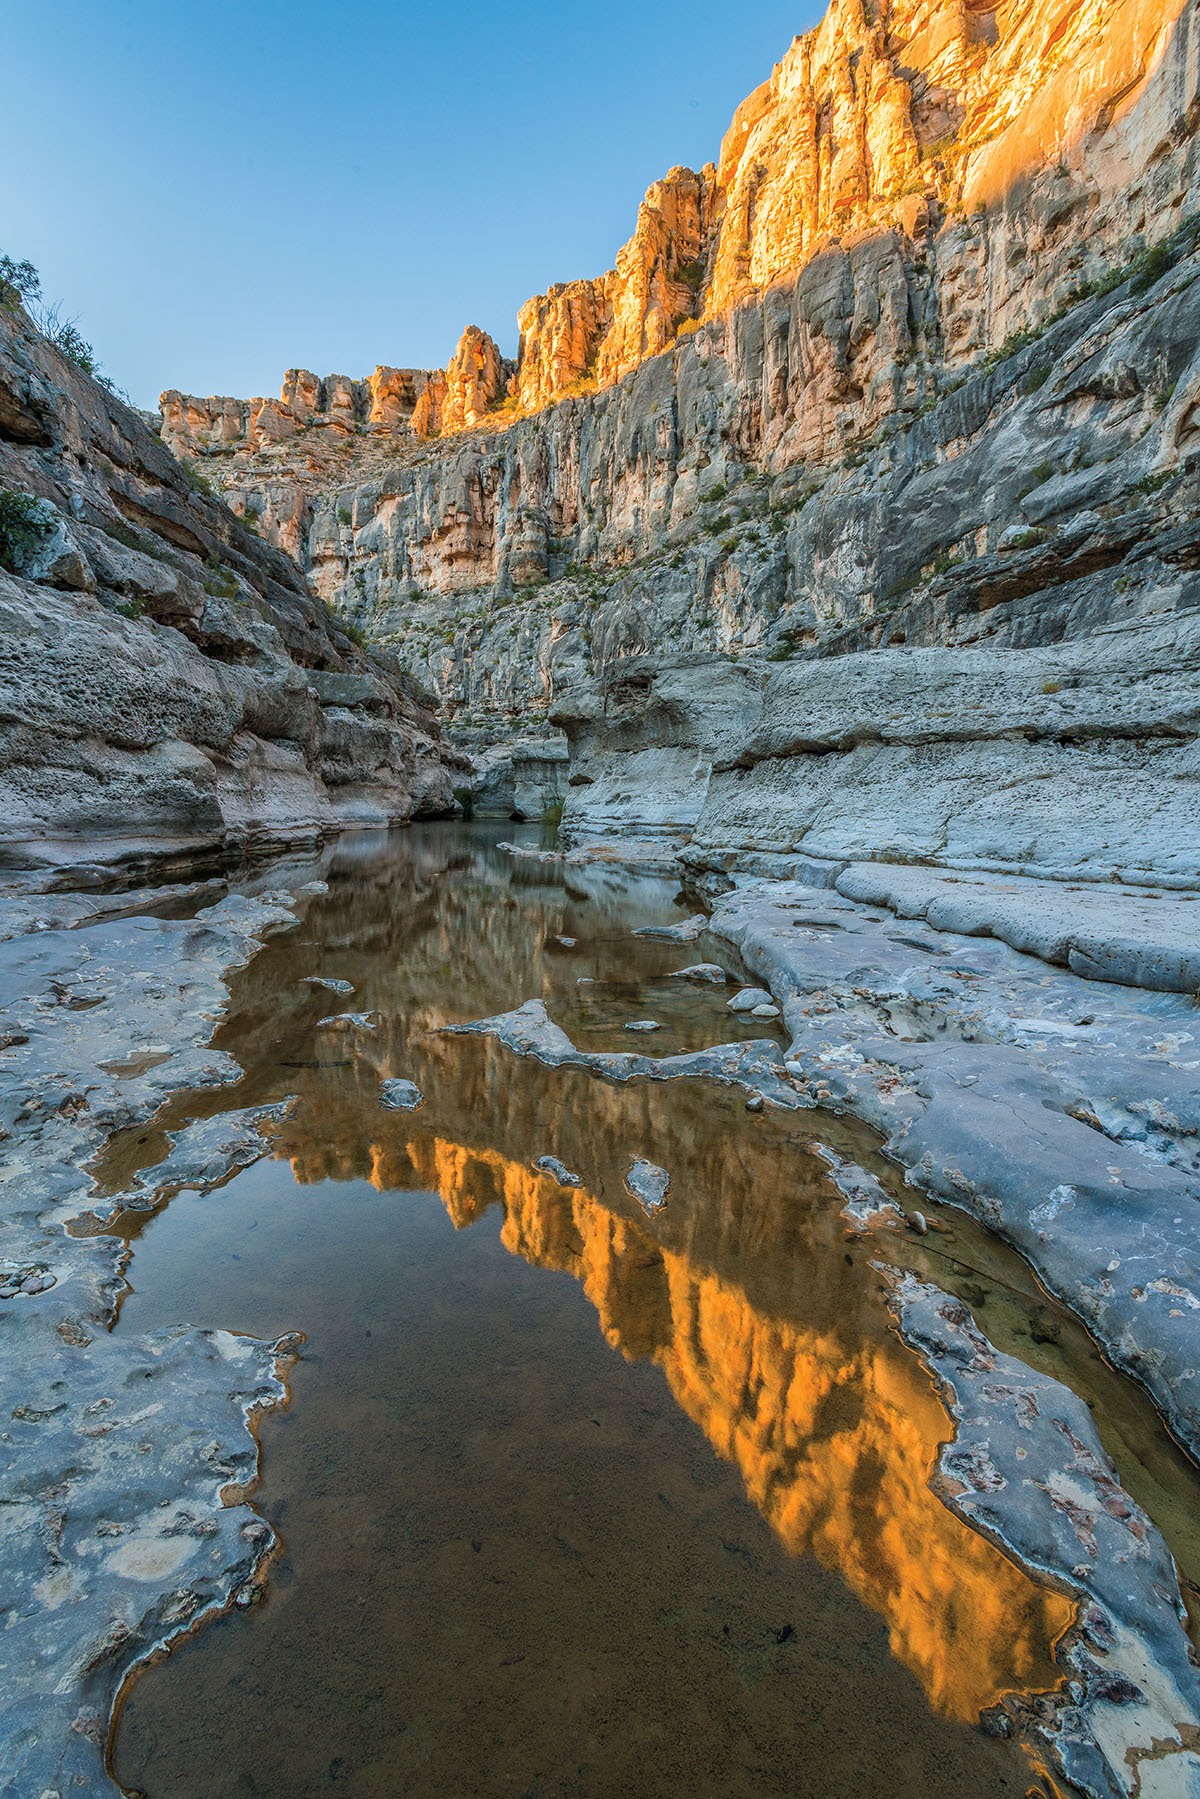 A reflection of the canyons along San Francisco Creek